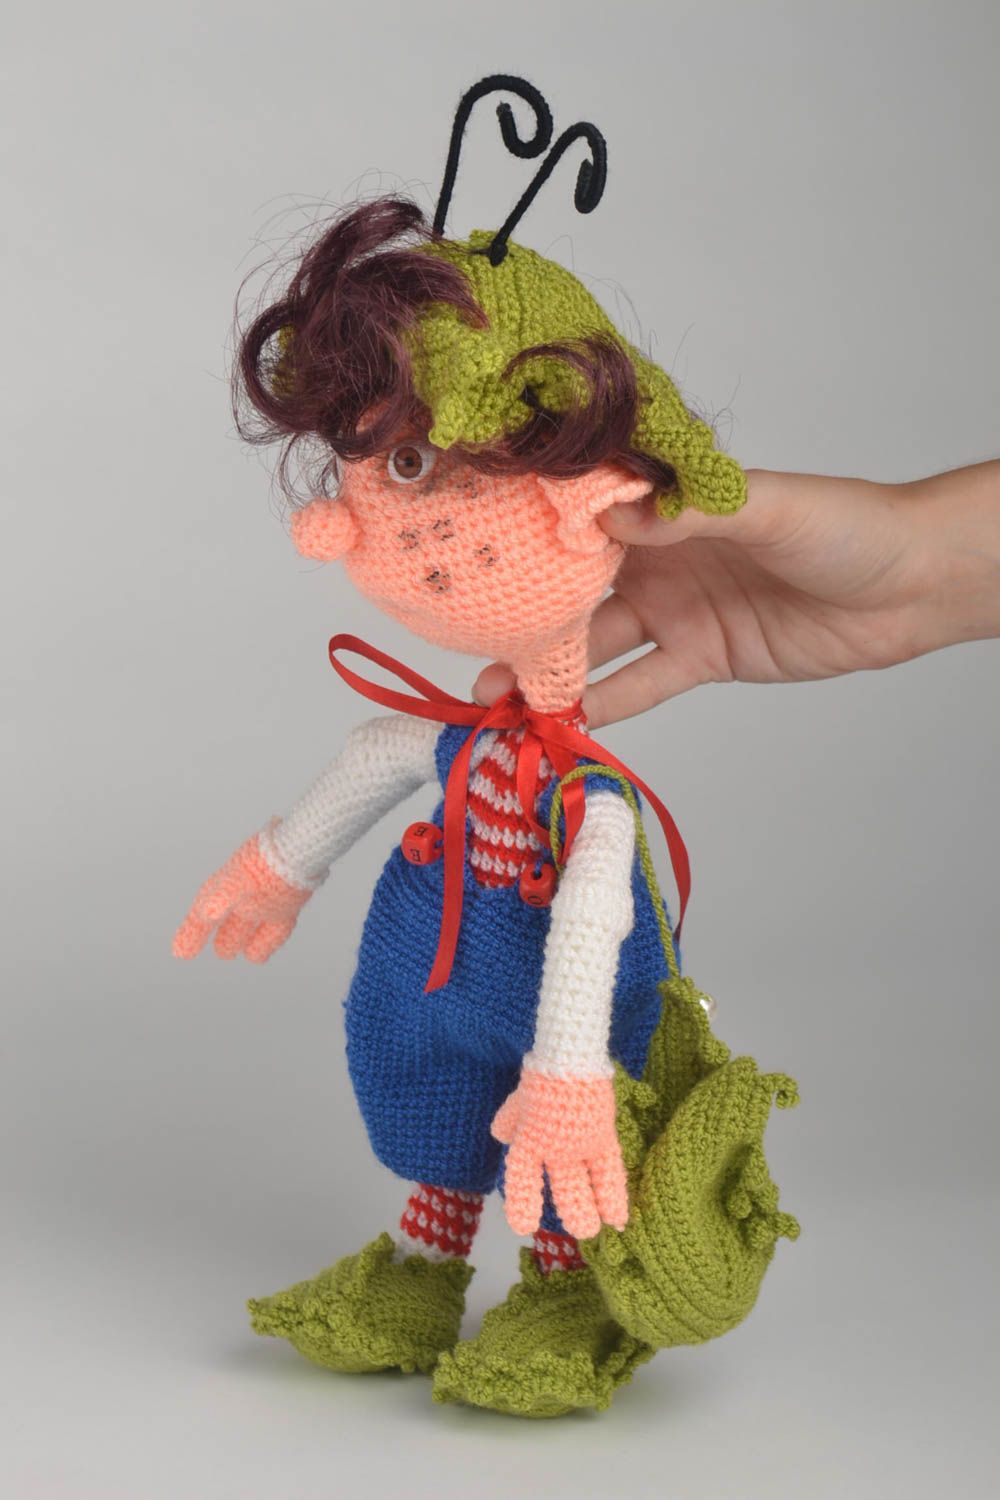 Handmade doll crochet toy gifts for kids nursery decor classic toys photo 5